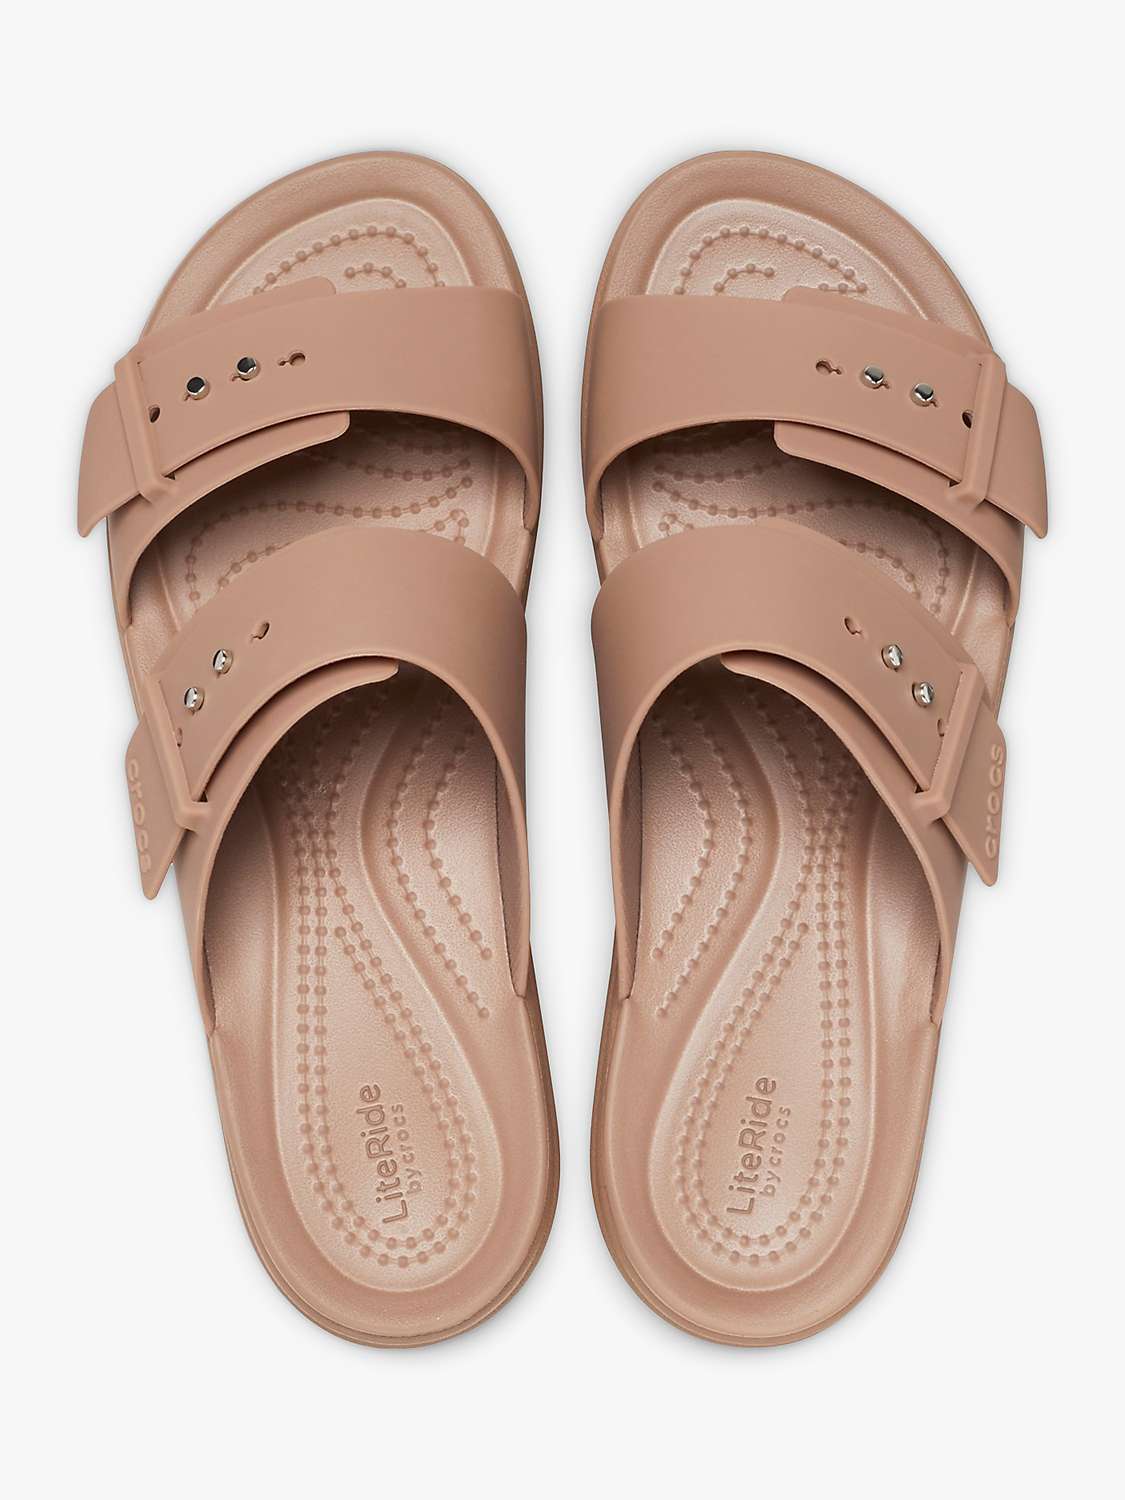 Buy Crocs Brooklyn Sandal Low Clogs, Light Brown Online at johnlewis.com